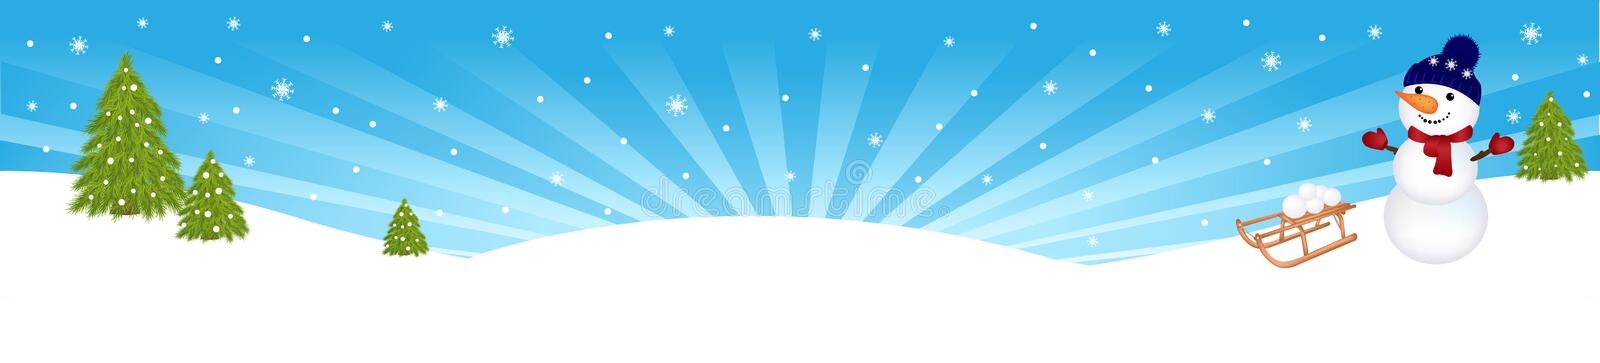 winter-banner-vector-16935786.jpg